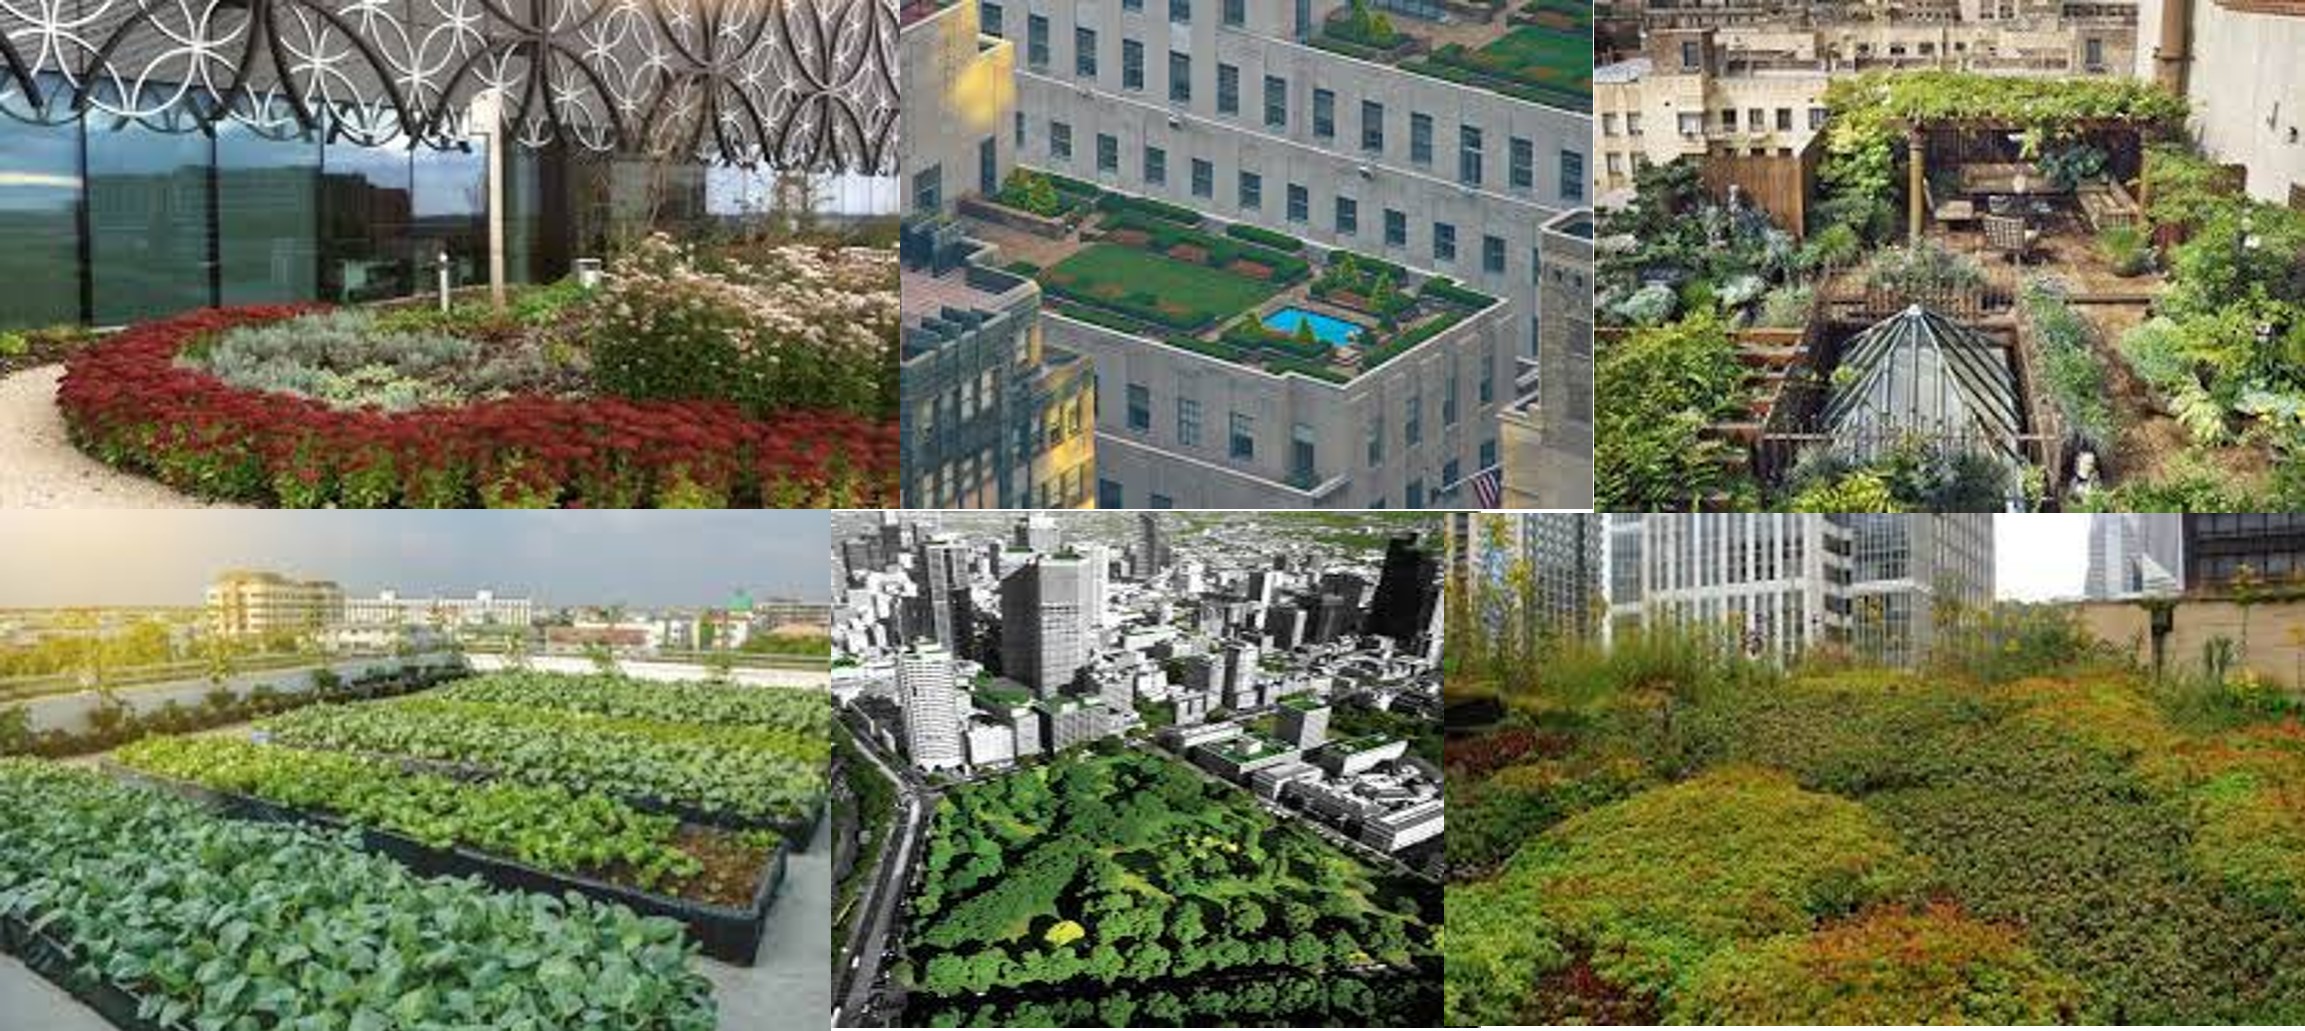 Jardines-urbanos-agricultura-urbana